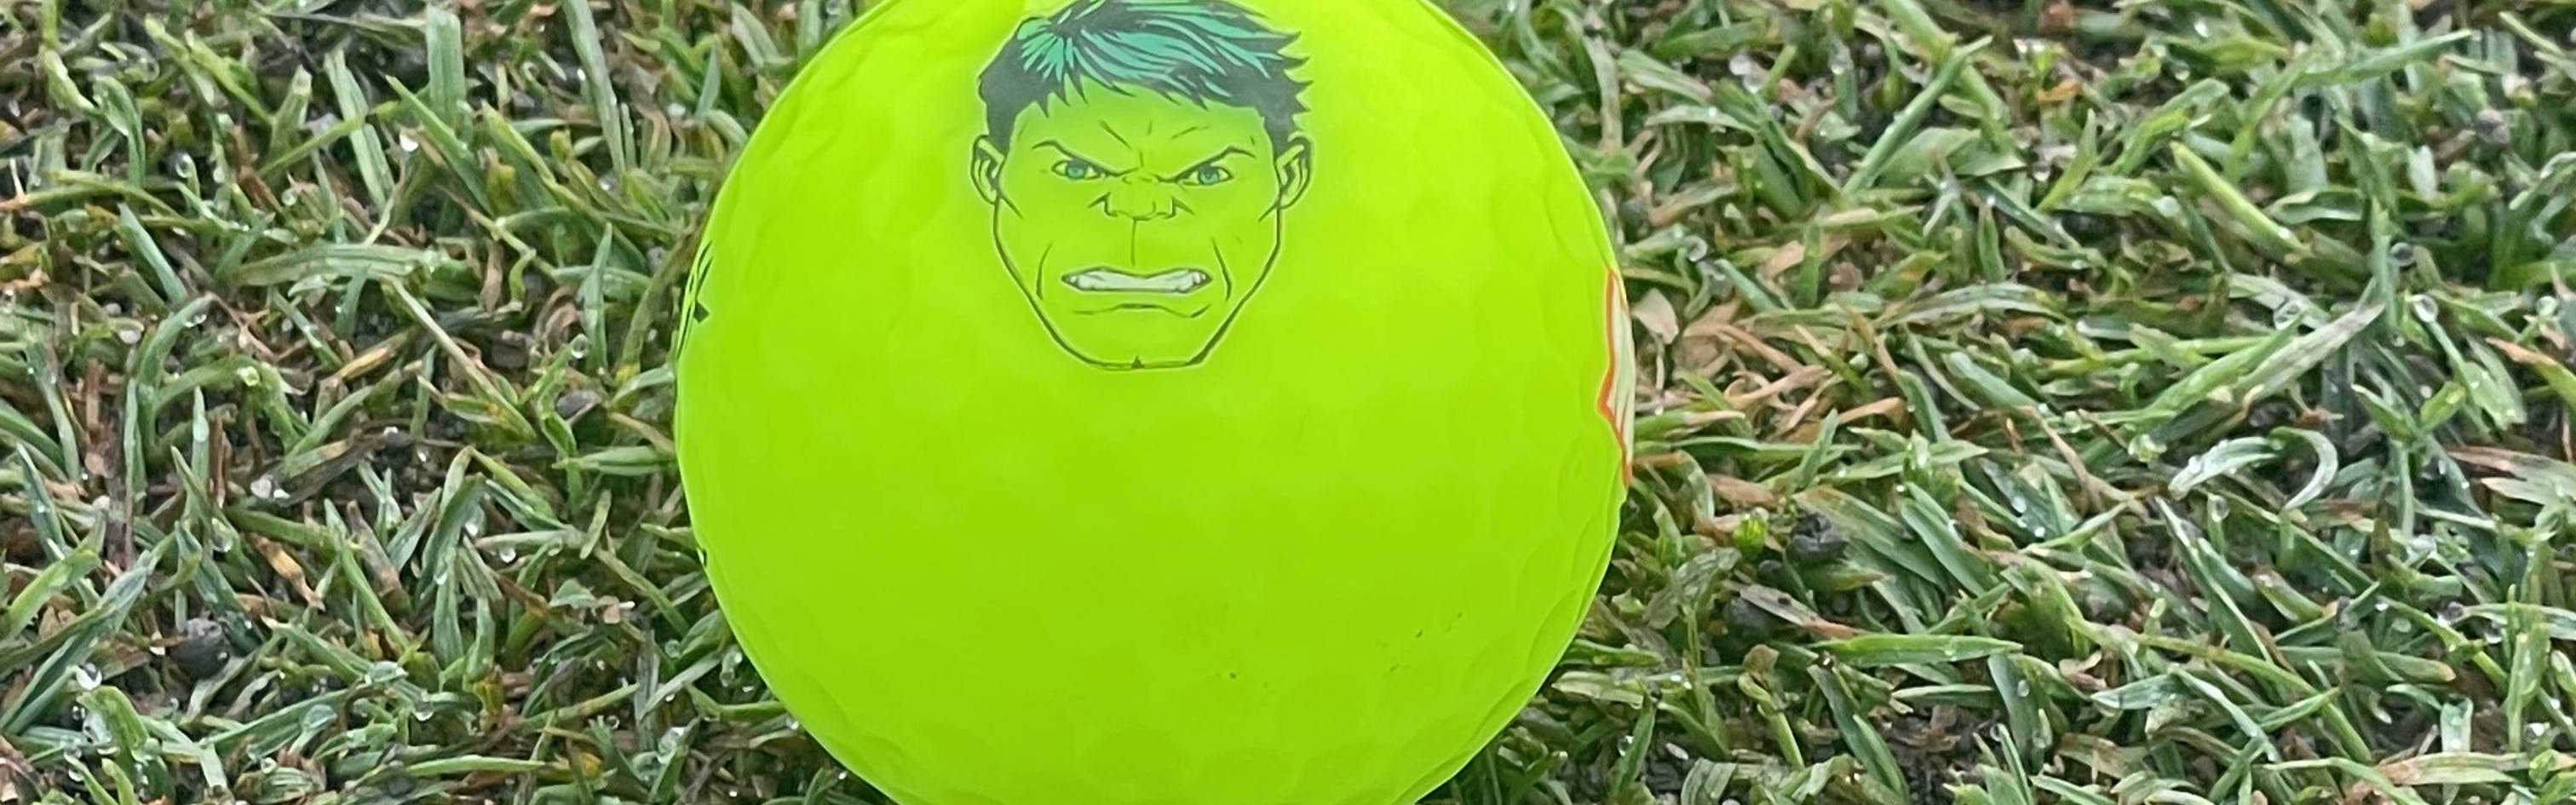 The volvik Marvel Gift Set Golf Balls and Marker.